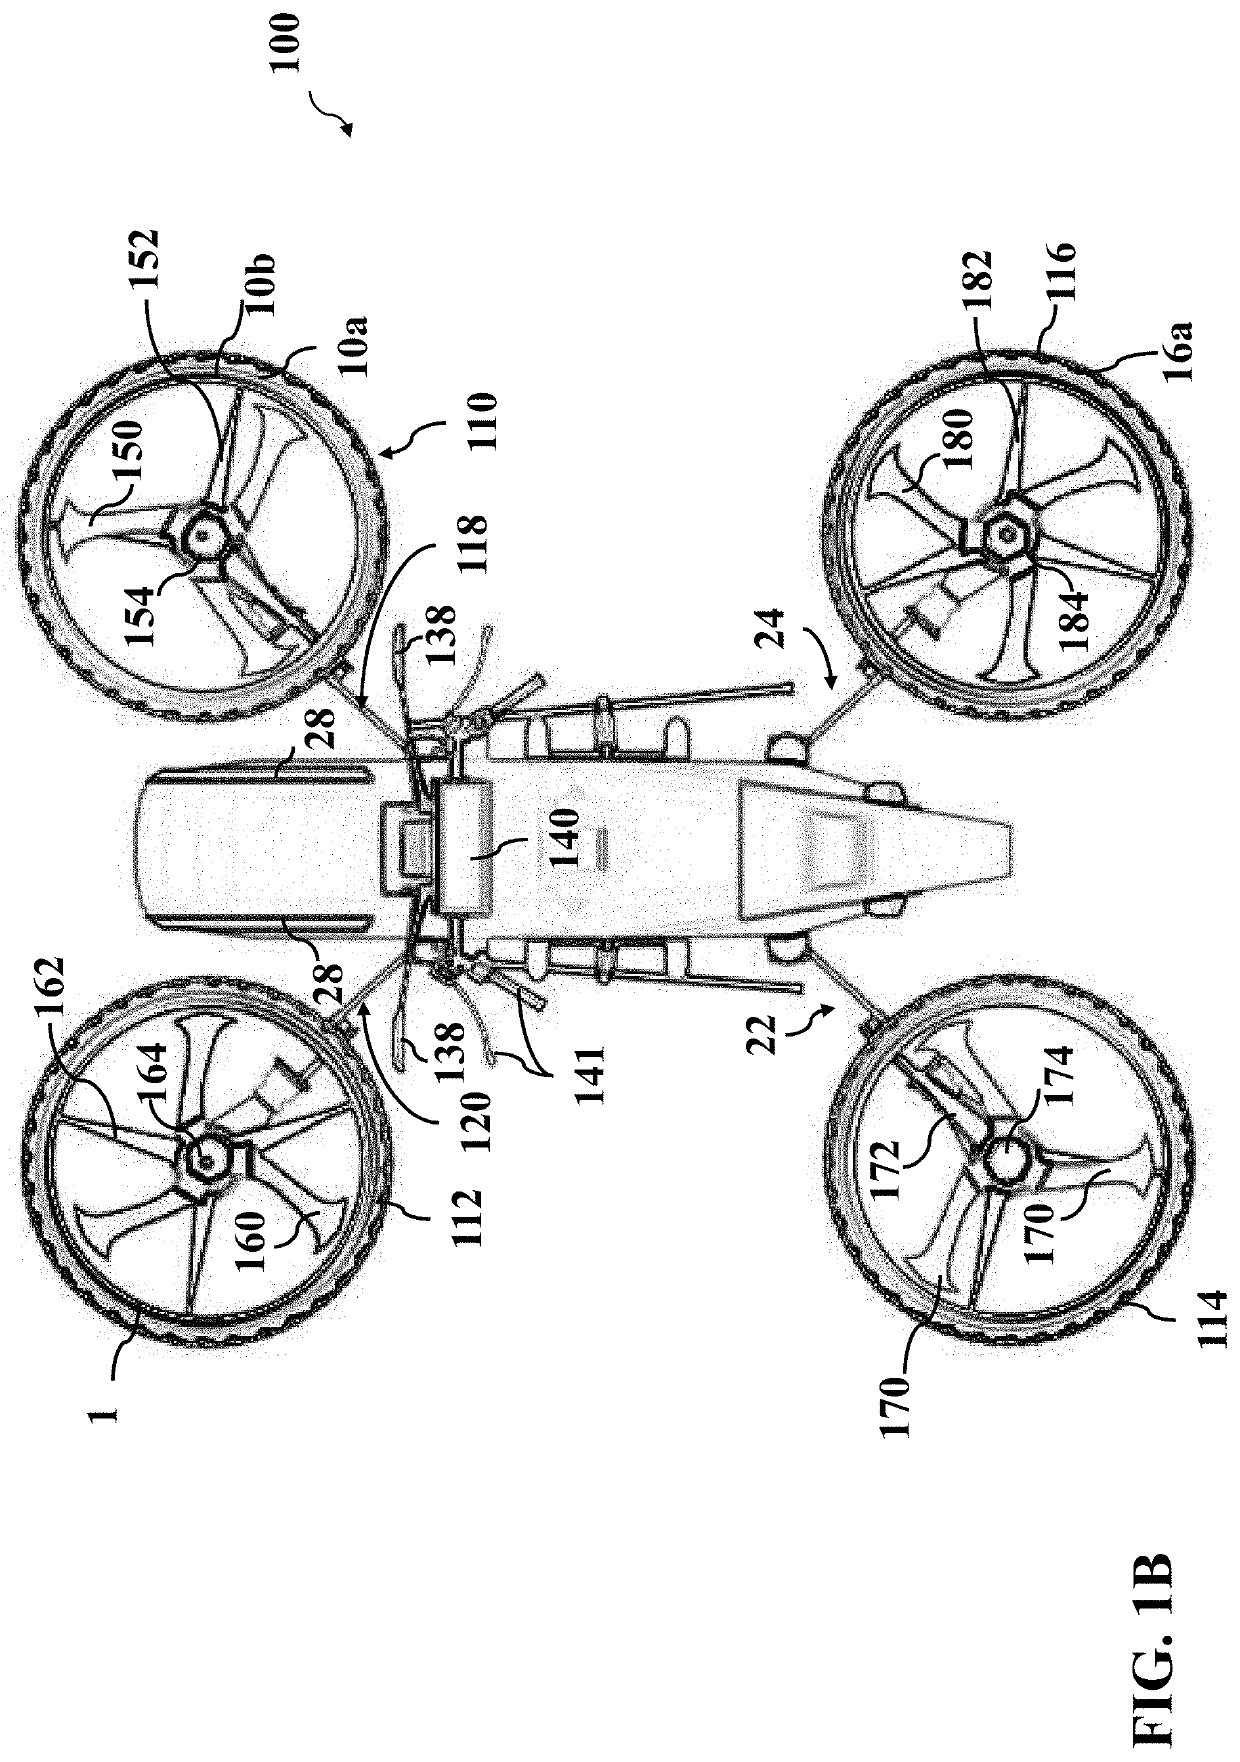 Multi-purpose wheels for use in multi-purpose vehicles